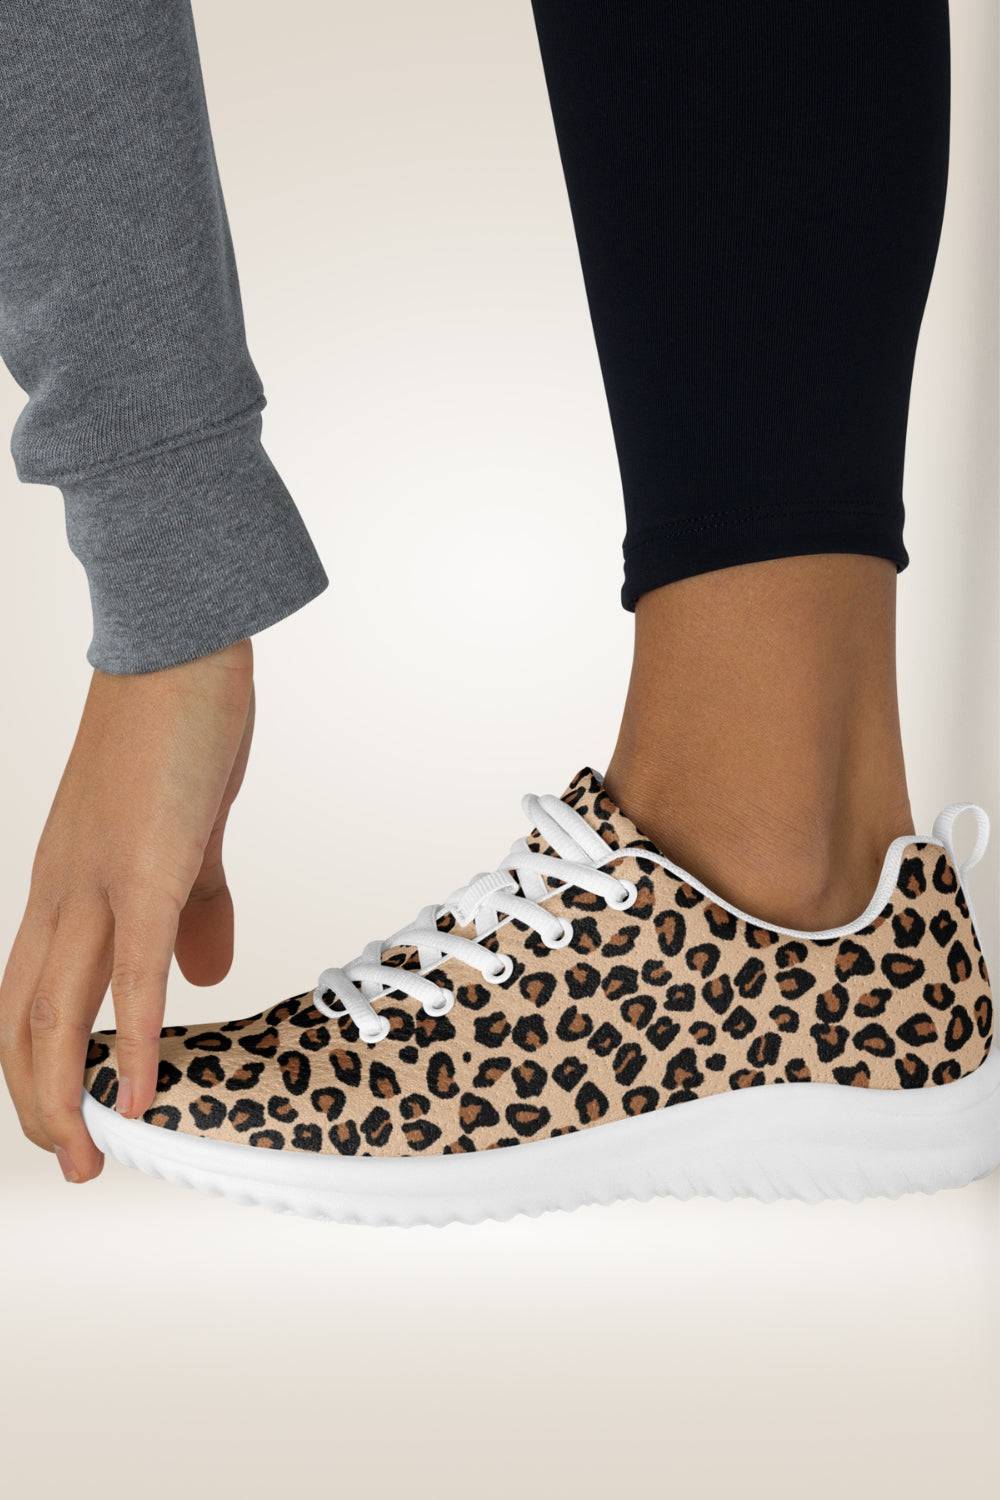 Lace Up Leopard Sneakers - TGC Boutique - Sneakers